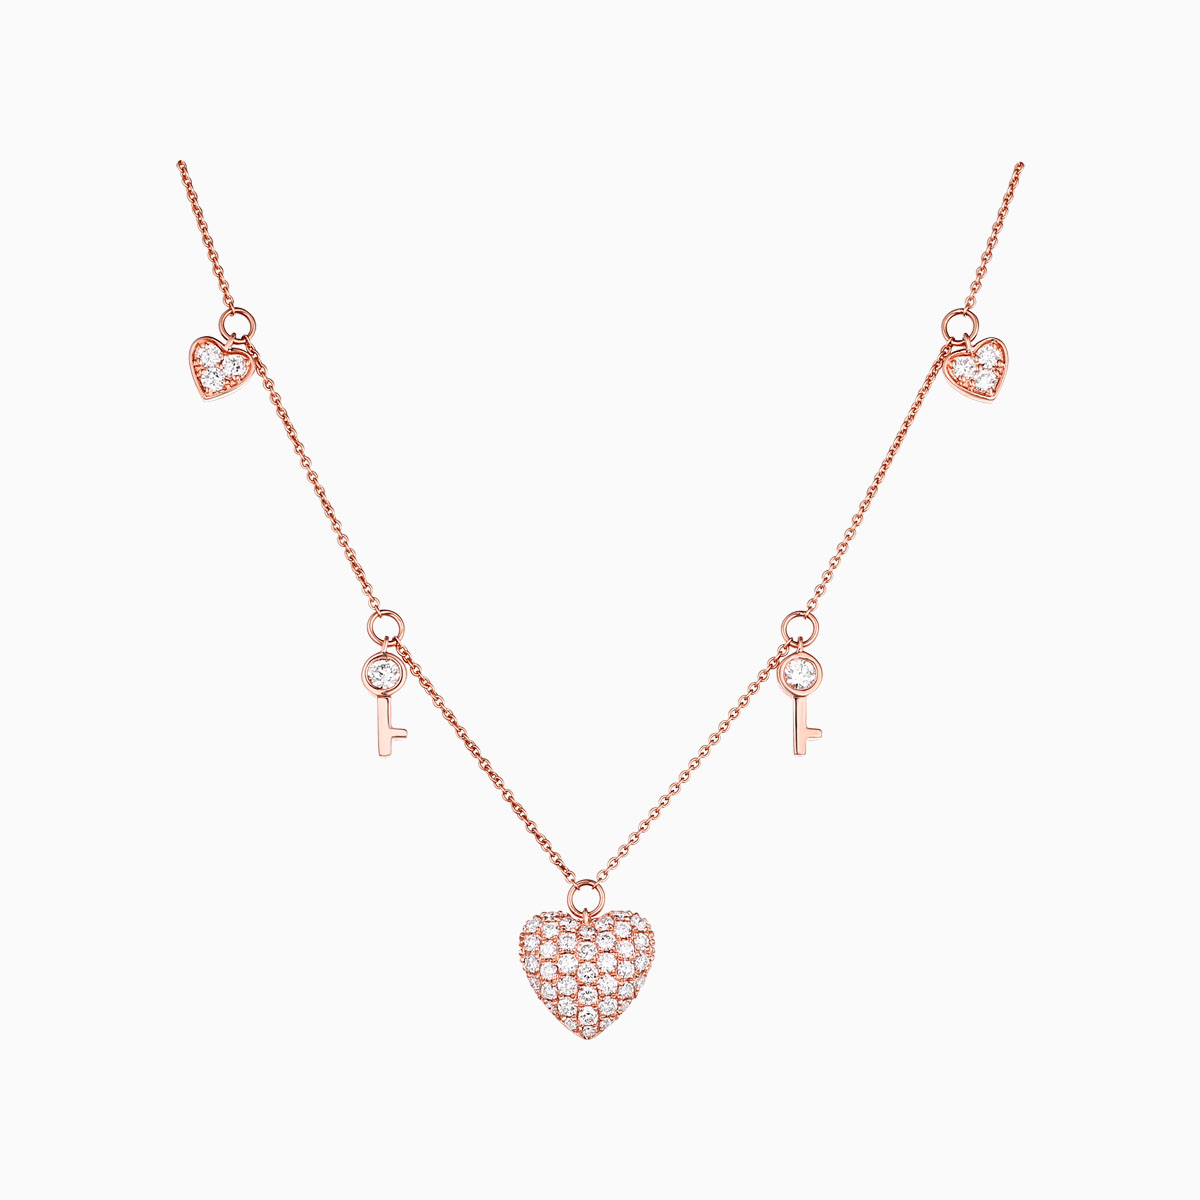 NL25536WHT- 14K Rose Gold Diamond Necklace, 0.76 TCW